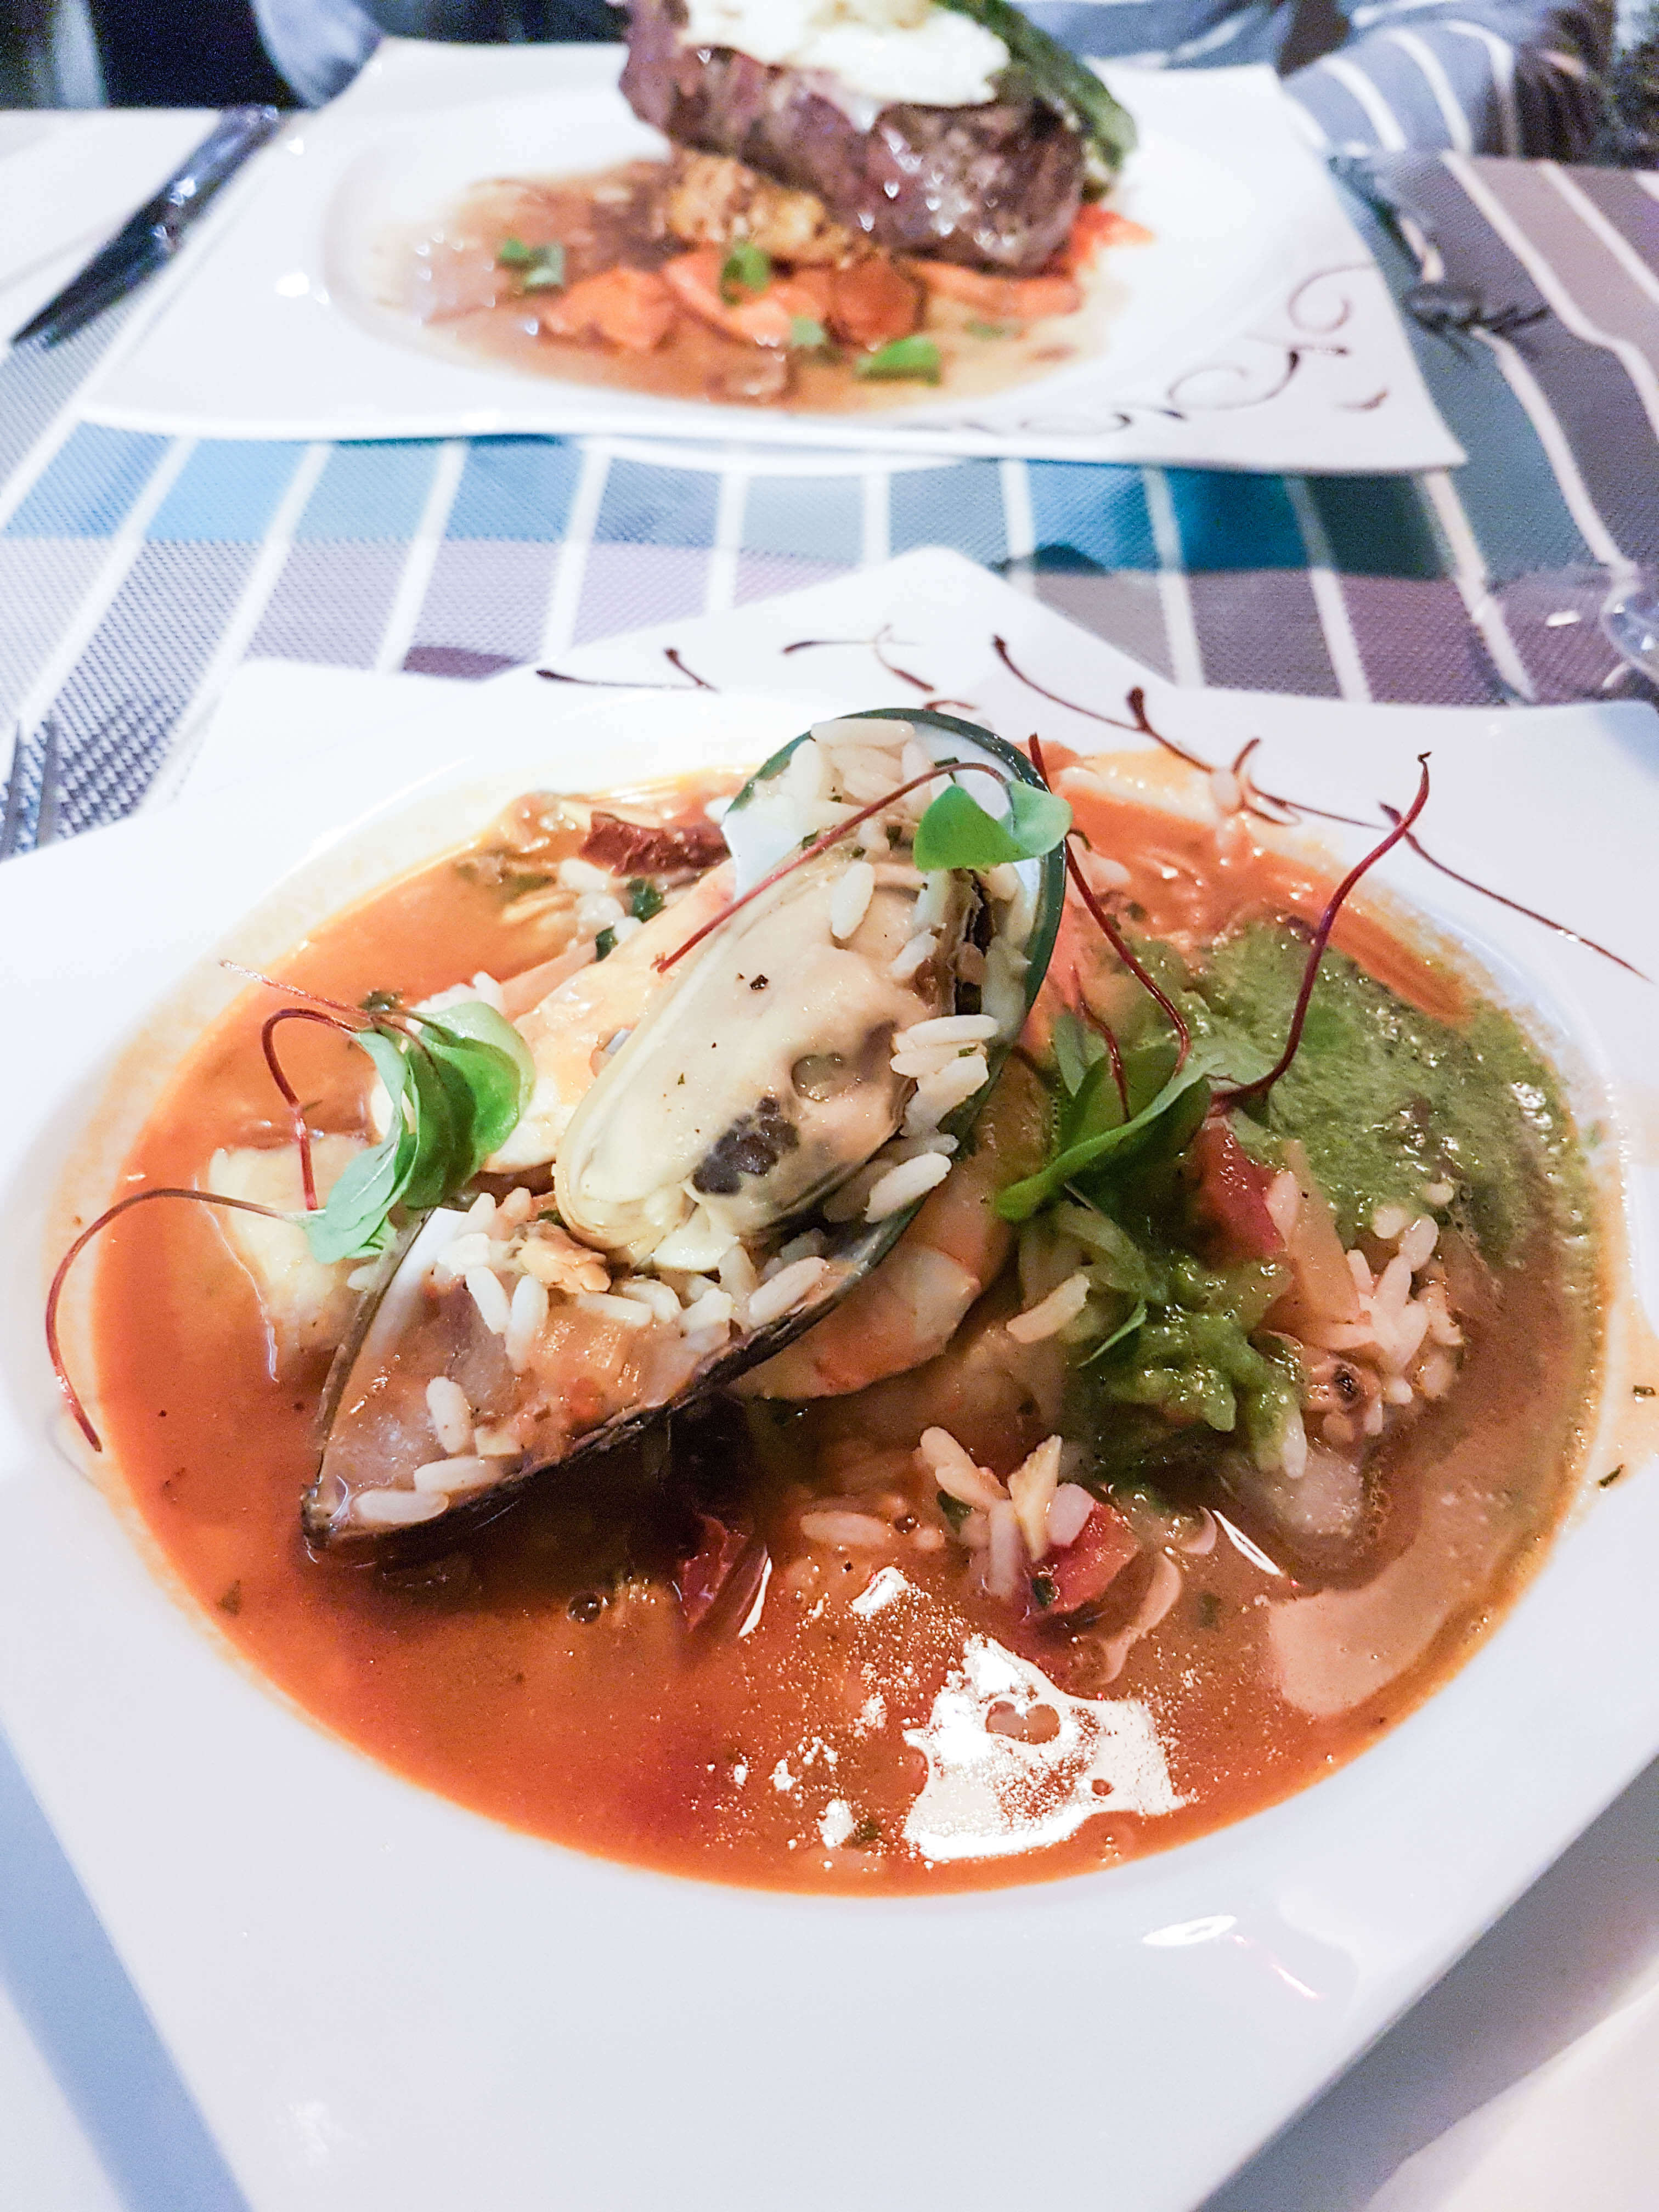 Kationette-lifestyleblogger-nrw-Food-Restaurant-tips-for-Funchal-on-Madeira-Island